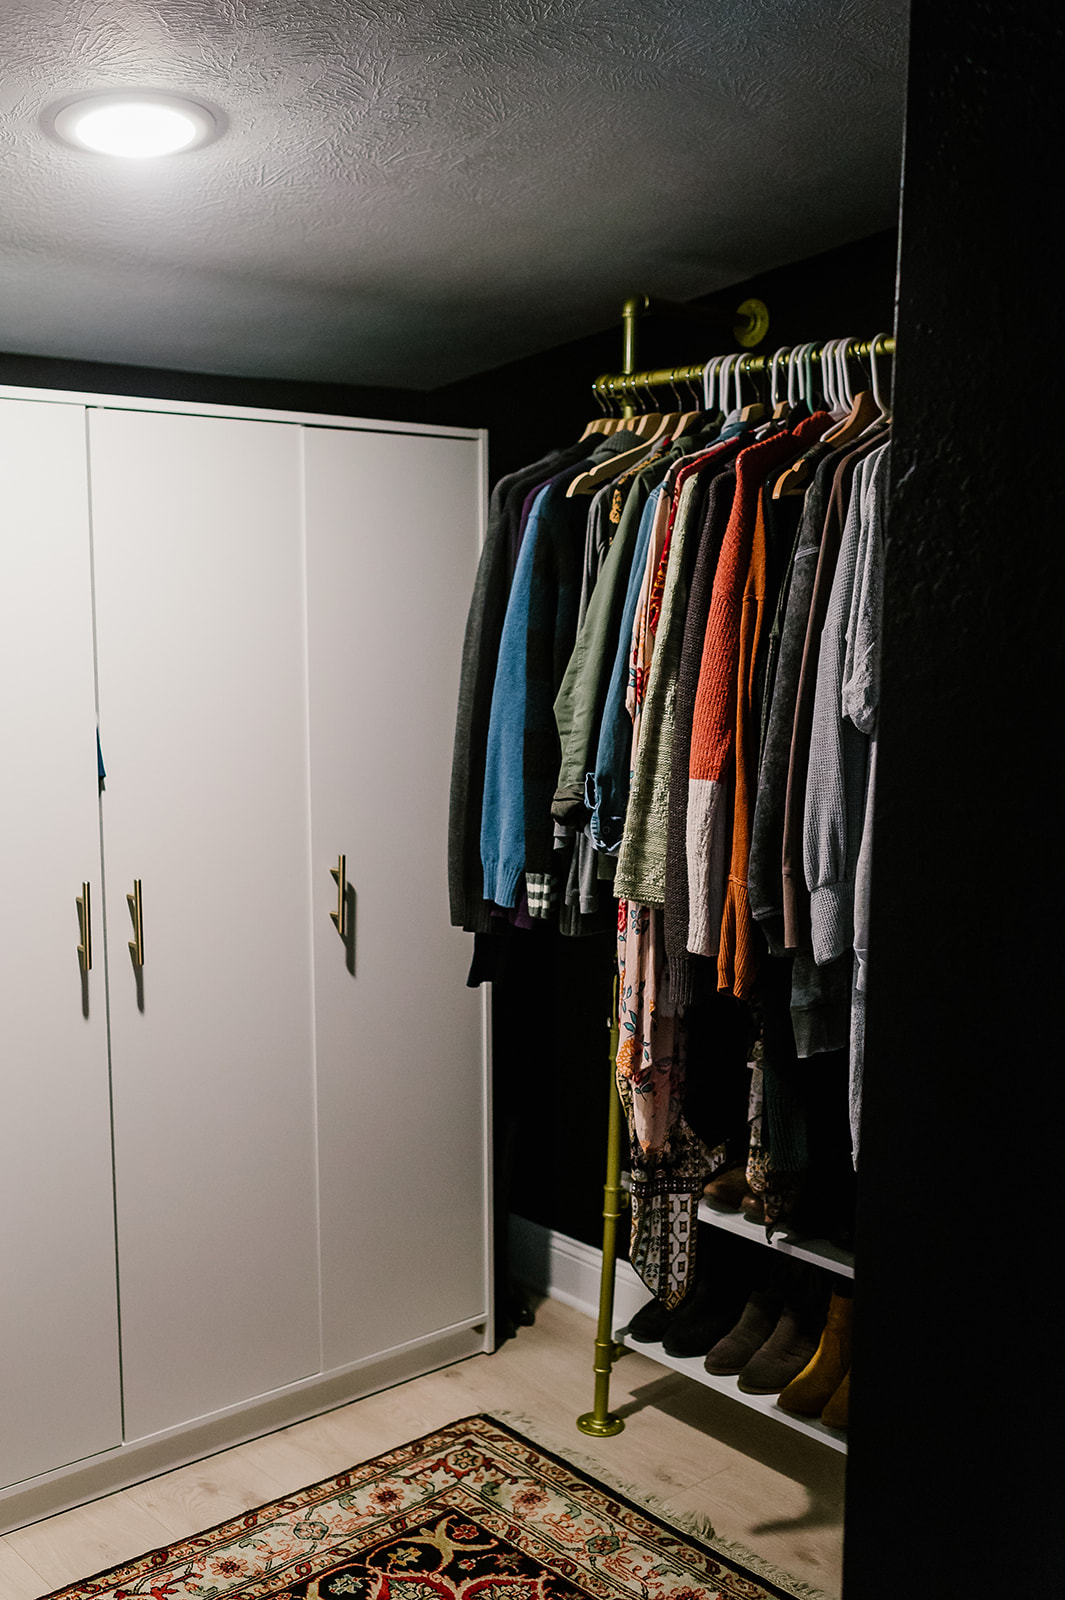 An Affordable and Functional Master Closet Design | Miranda Schroeder Blog

www.mirandaschroeder.com
